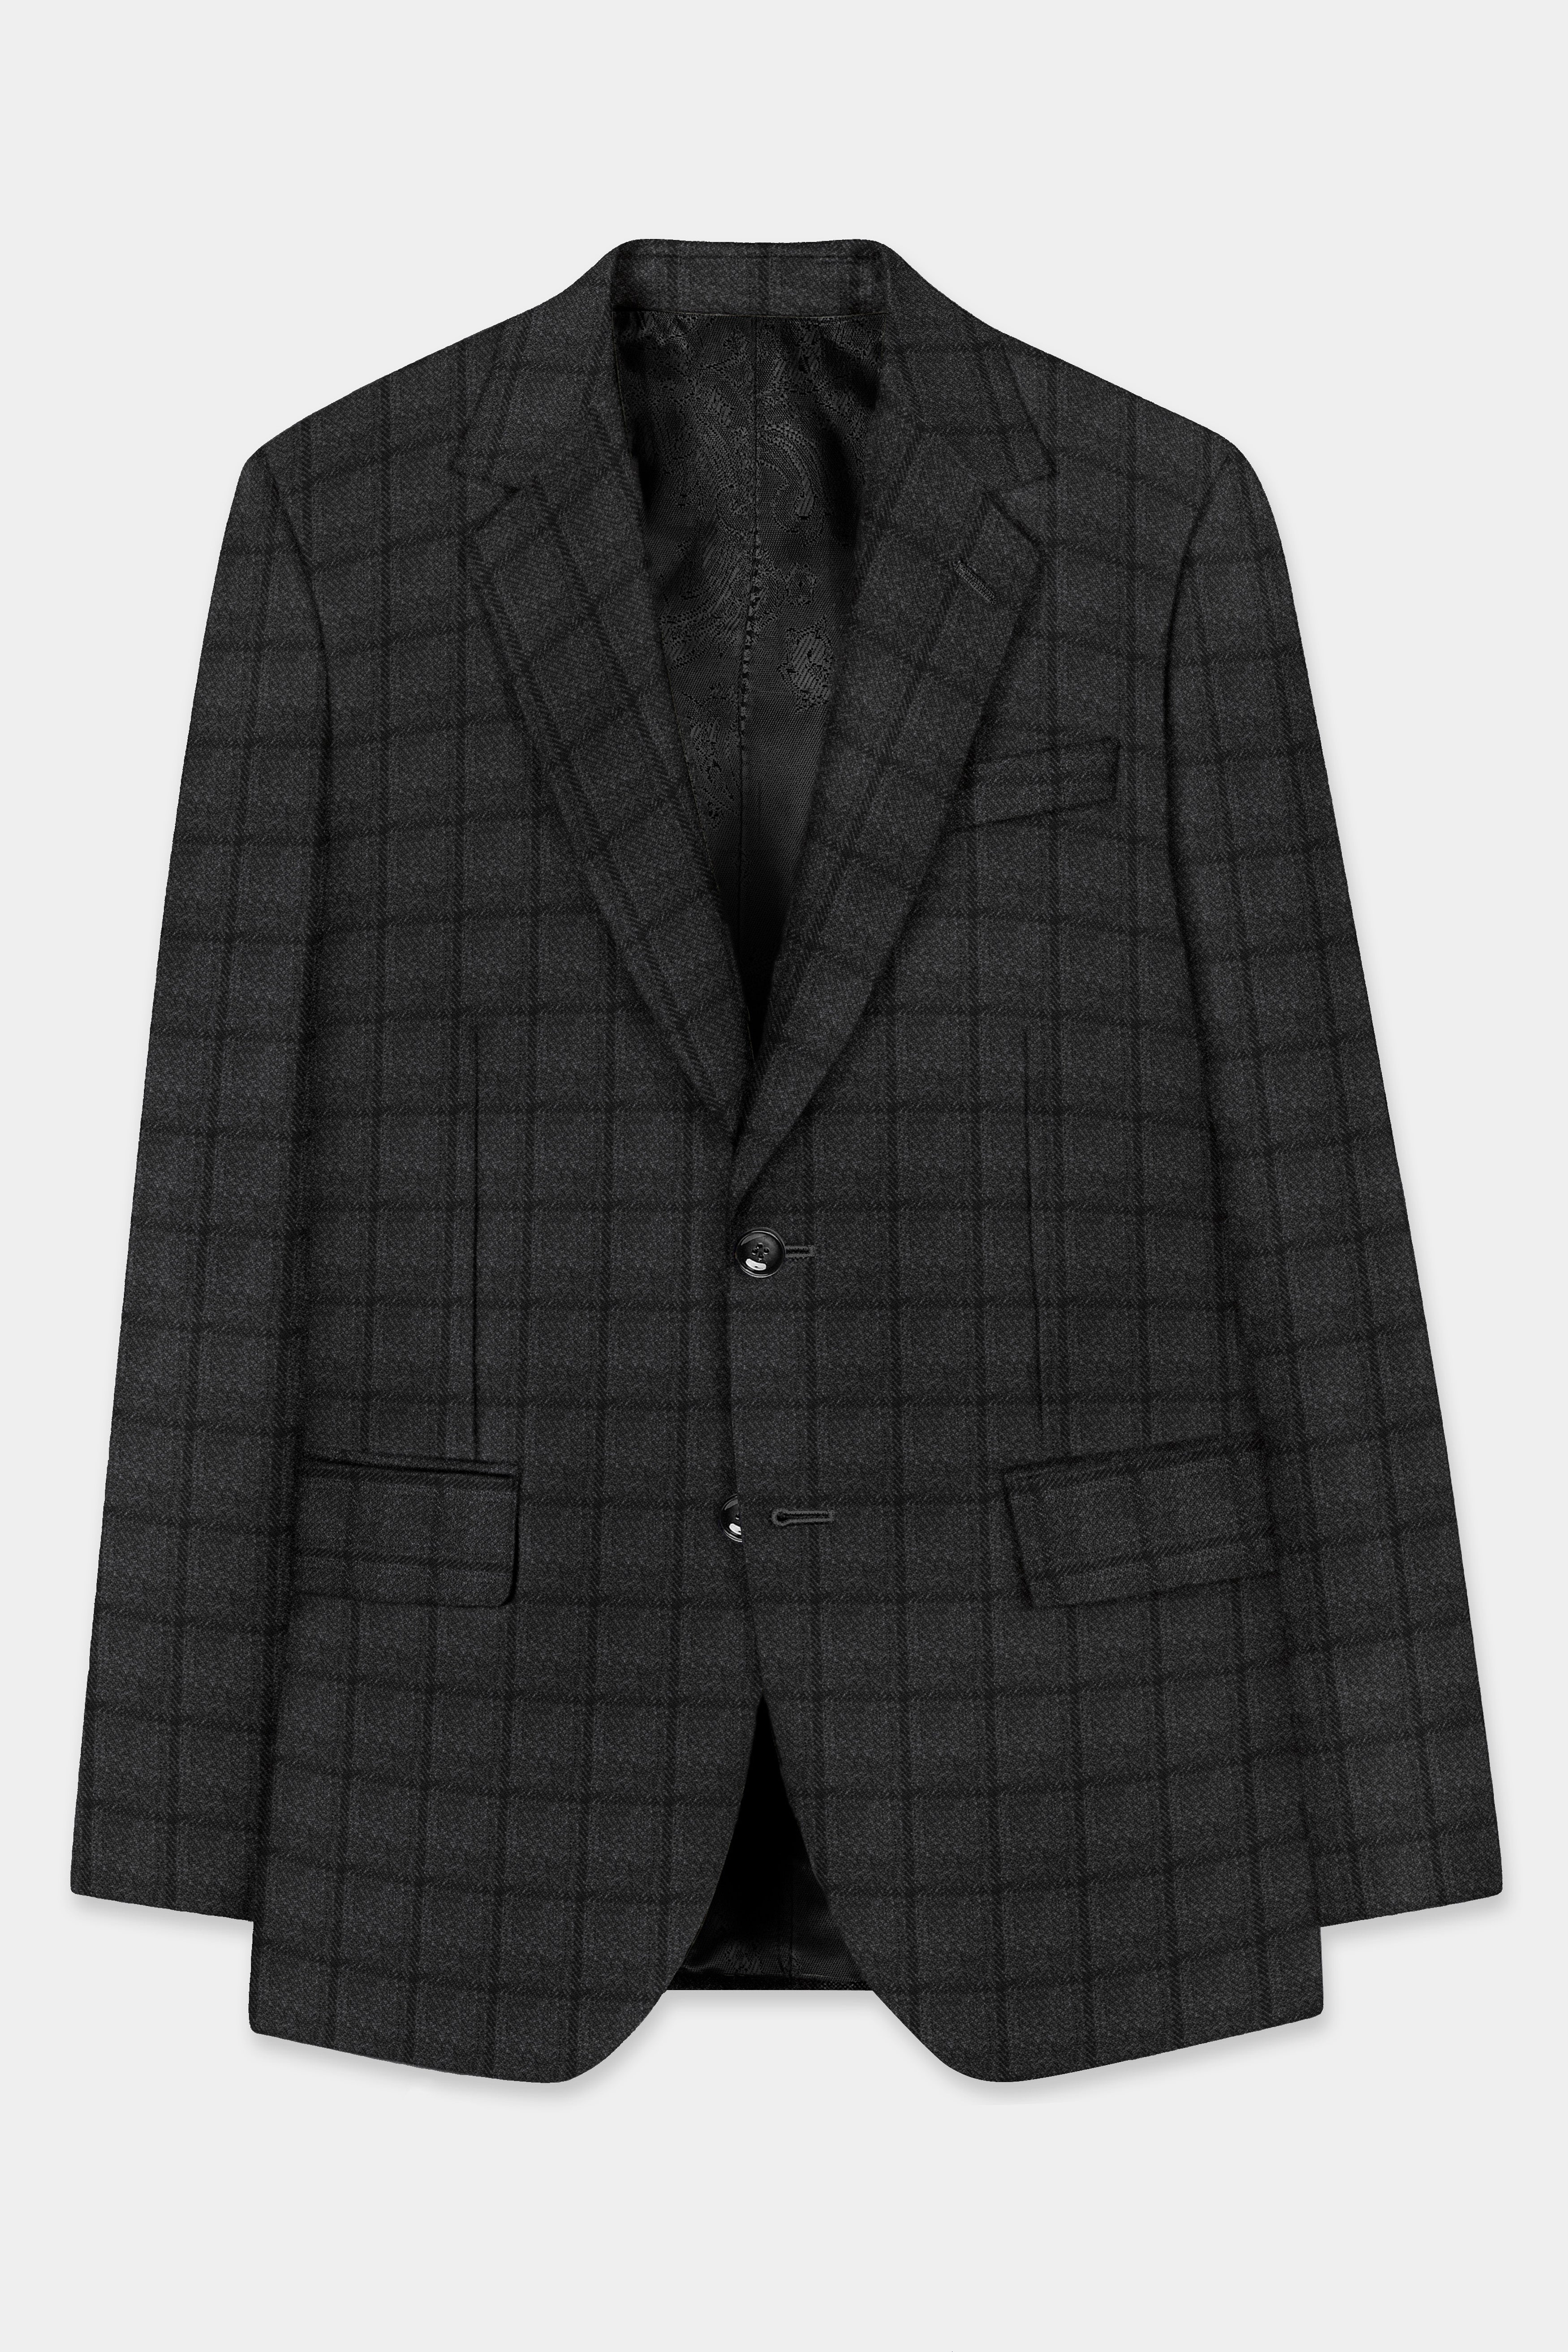 Zeus Dark Brown Plaid Tweed Suit